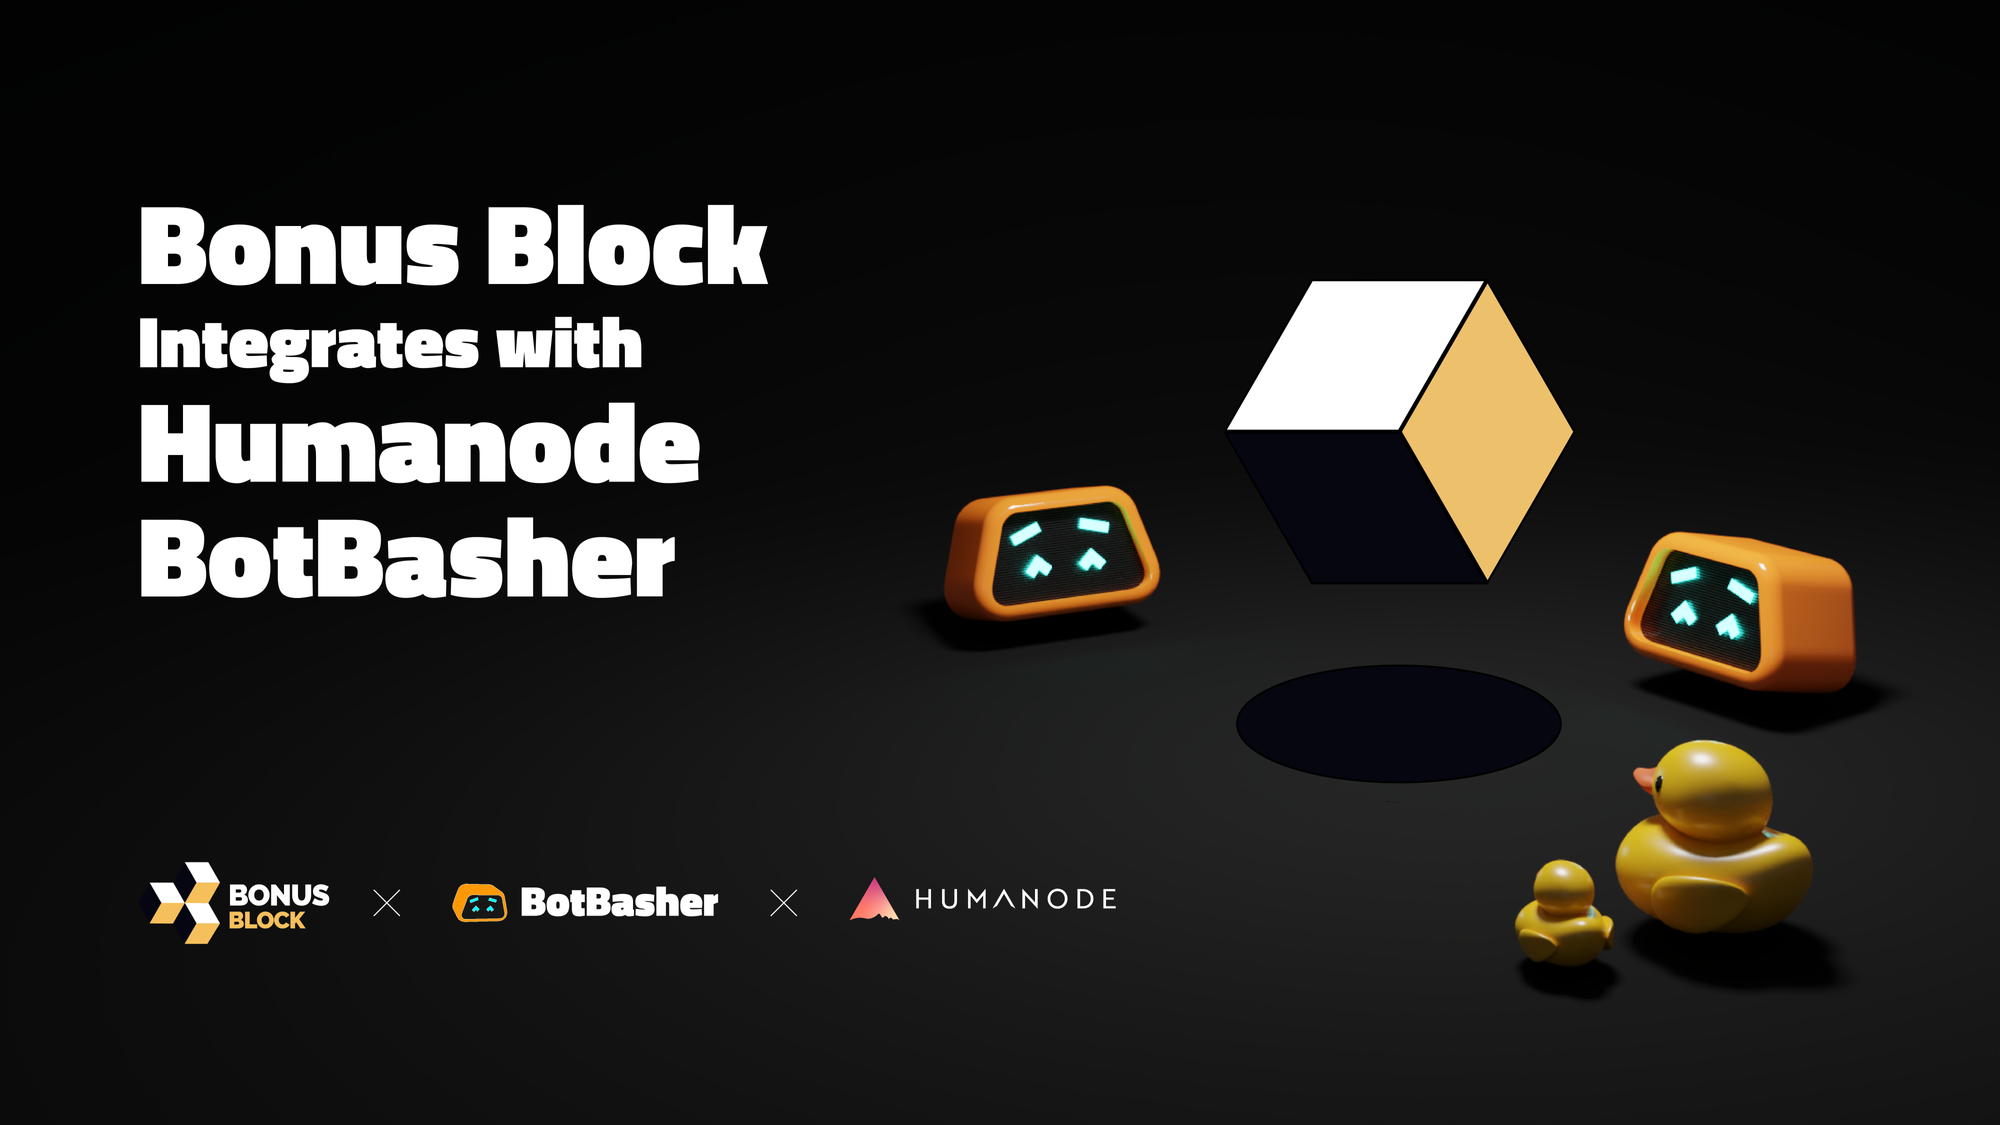 BonusBlock integrates with Humanode BotBasher